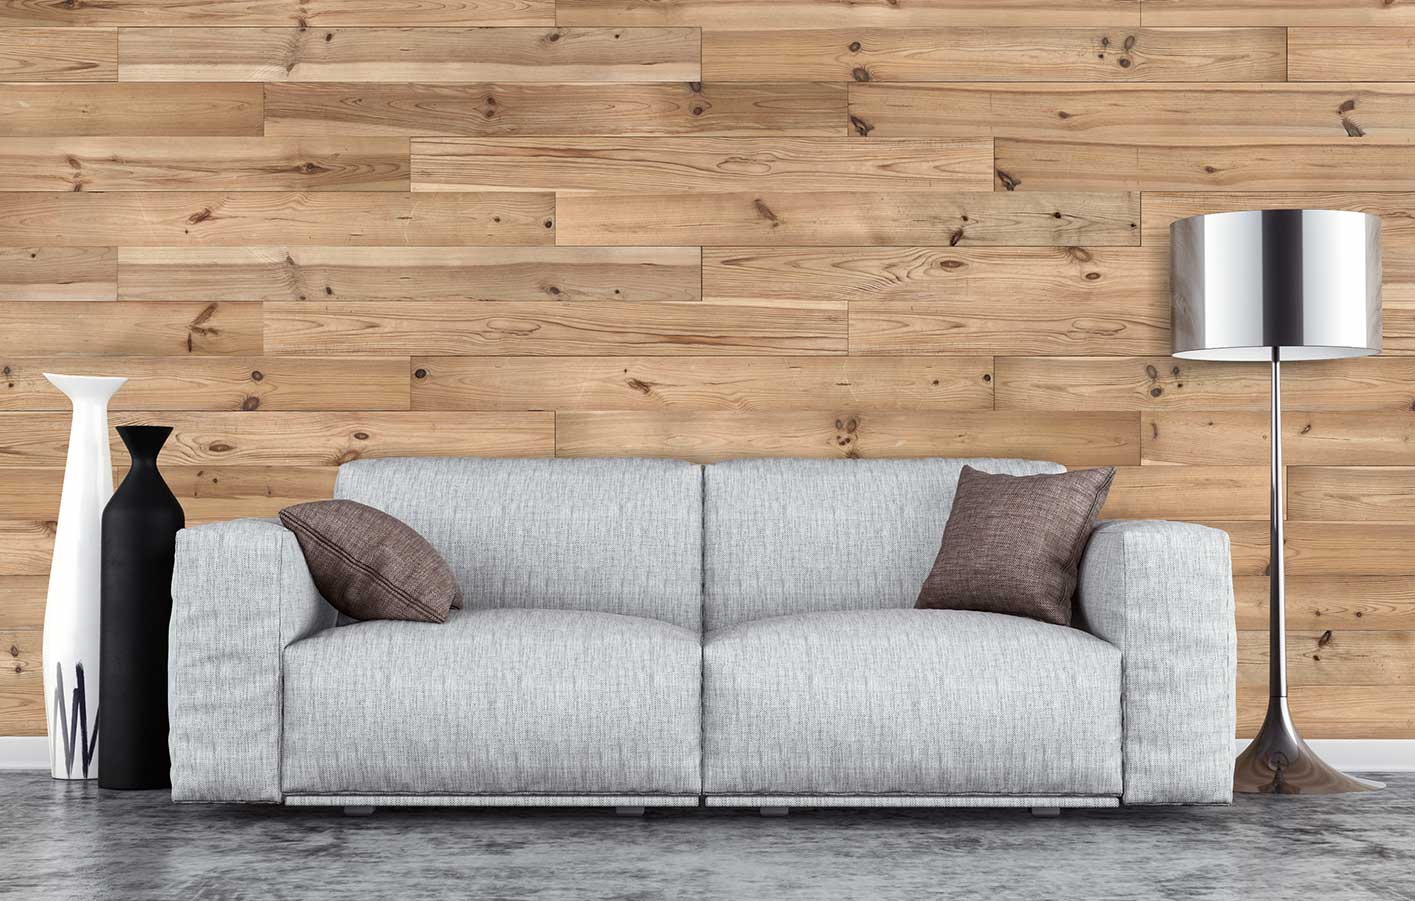 Holzwand hinter Sofa